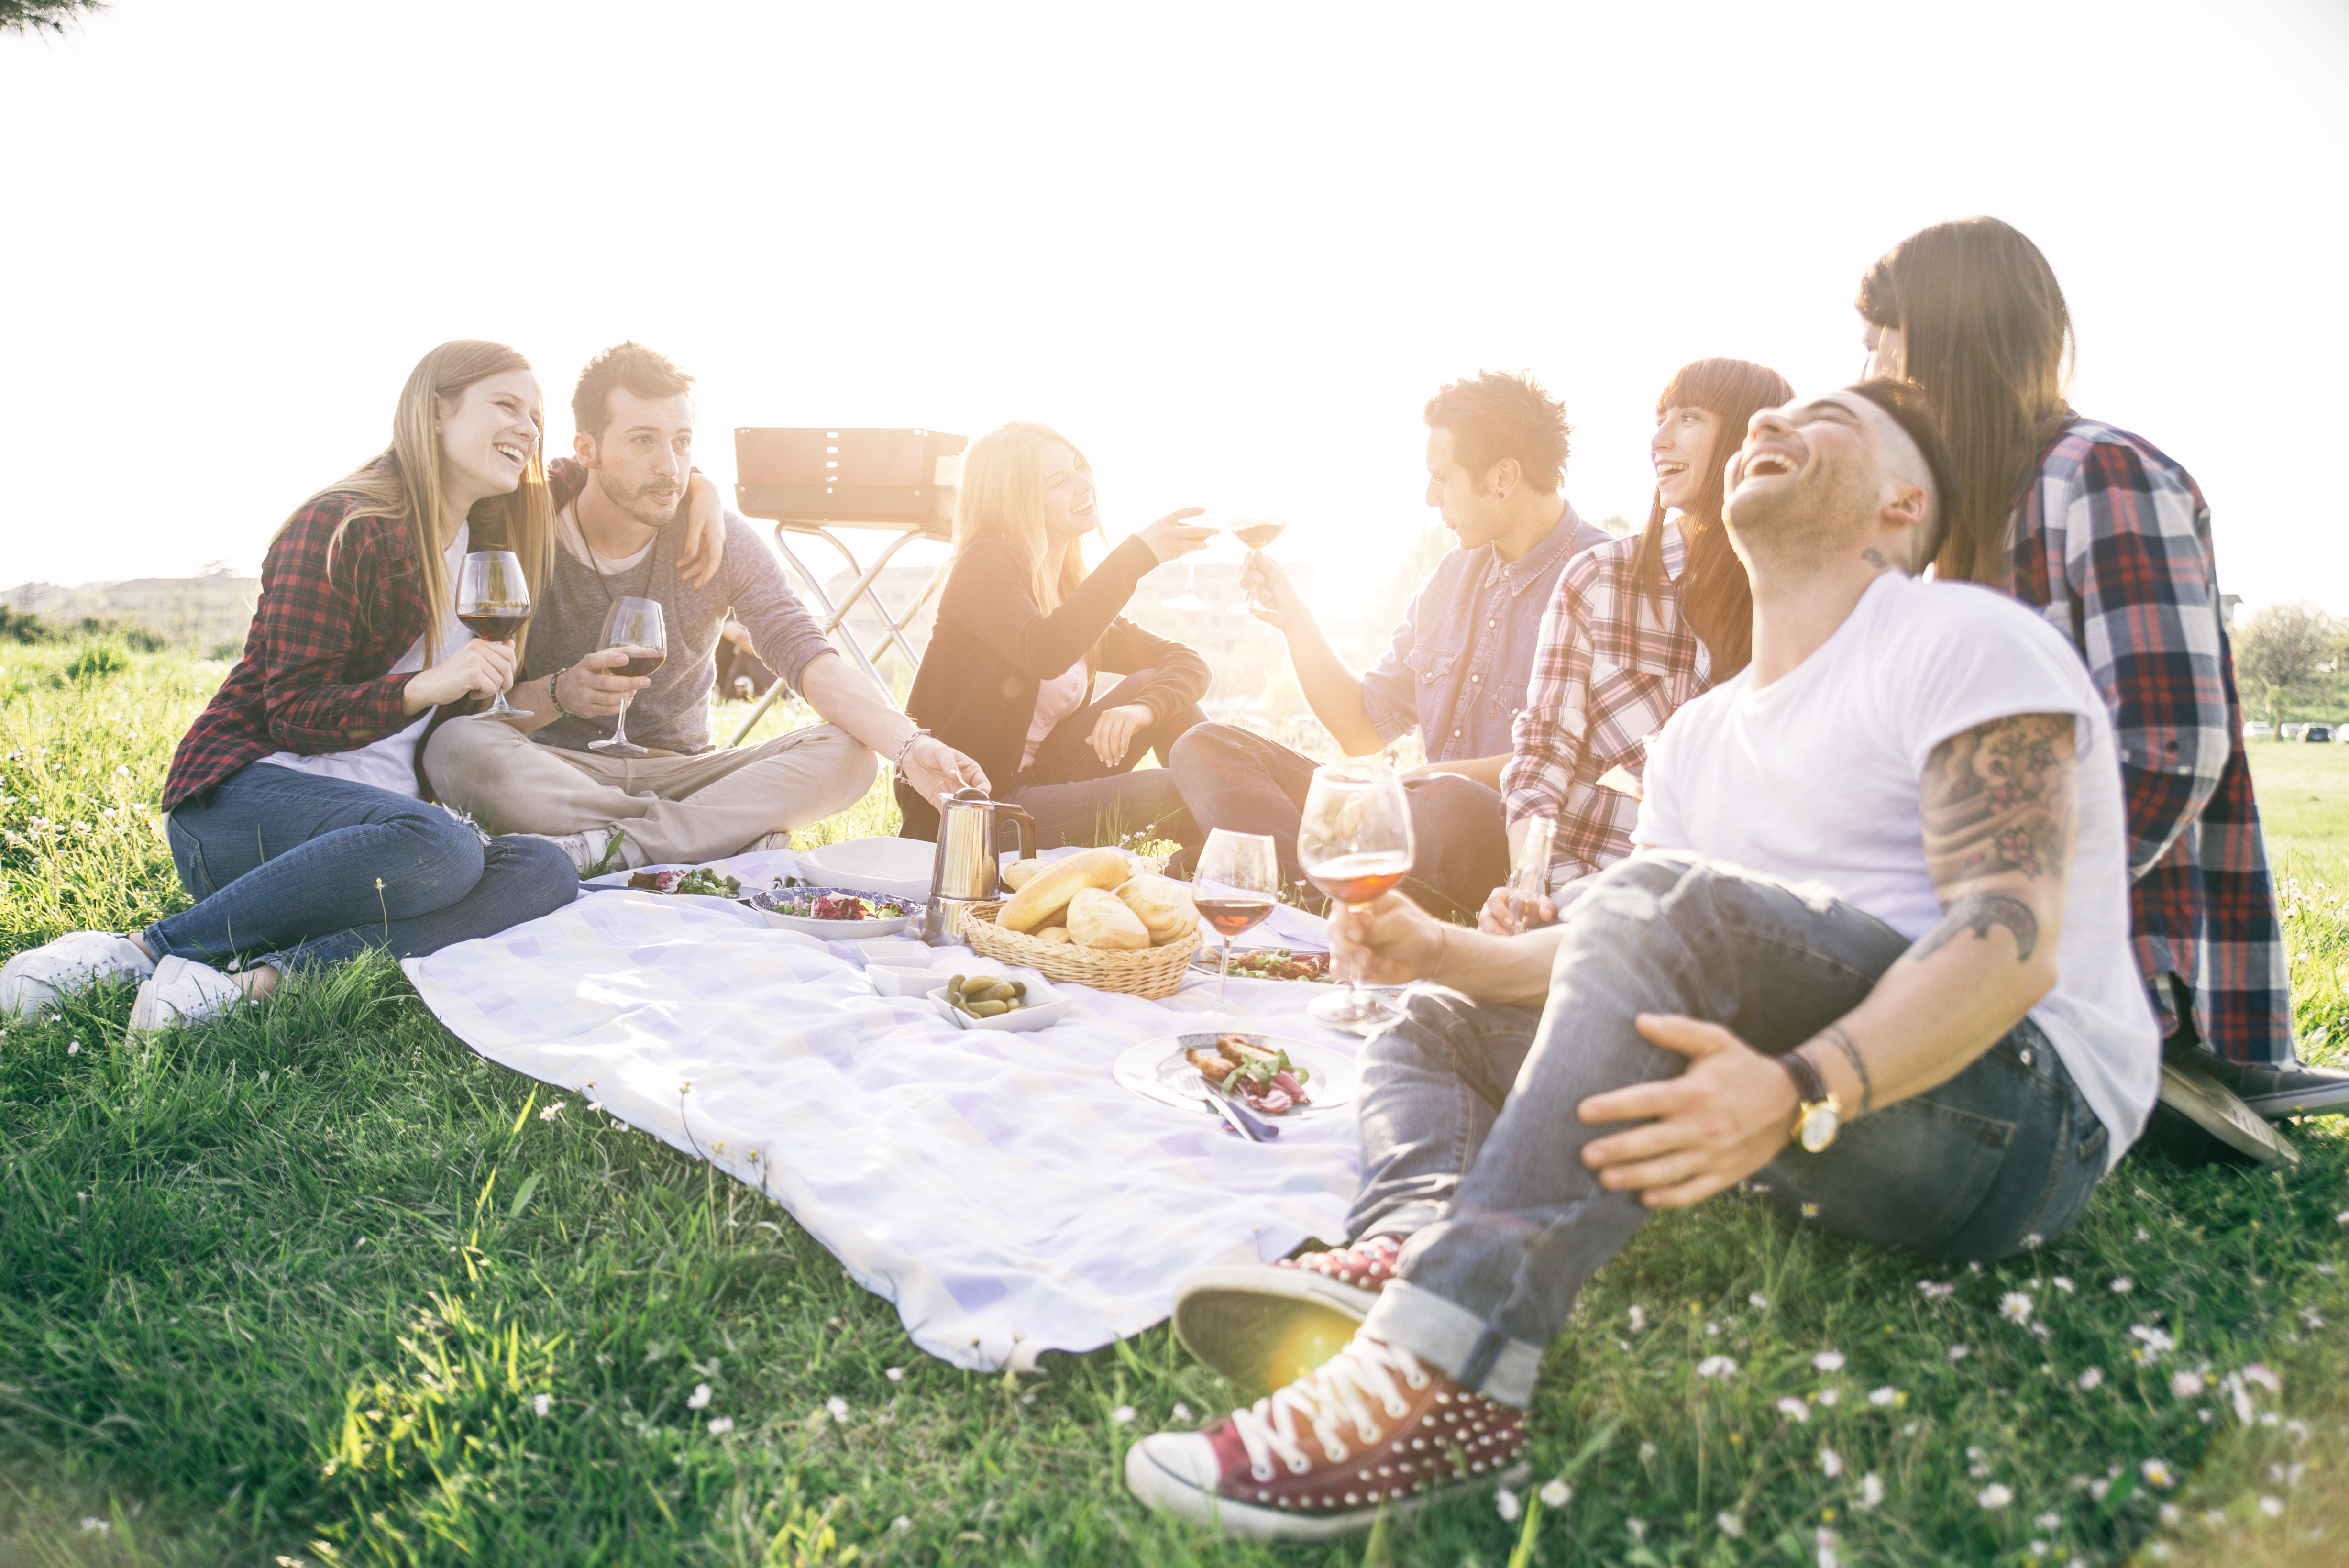 Friends enjoying a picnic